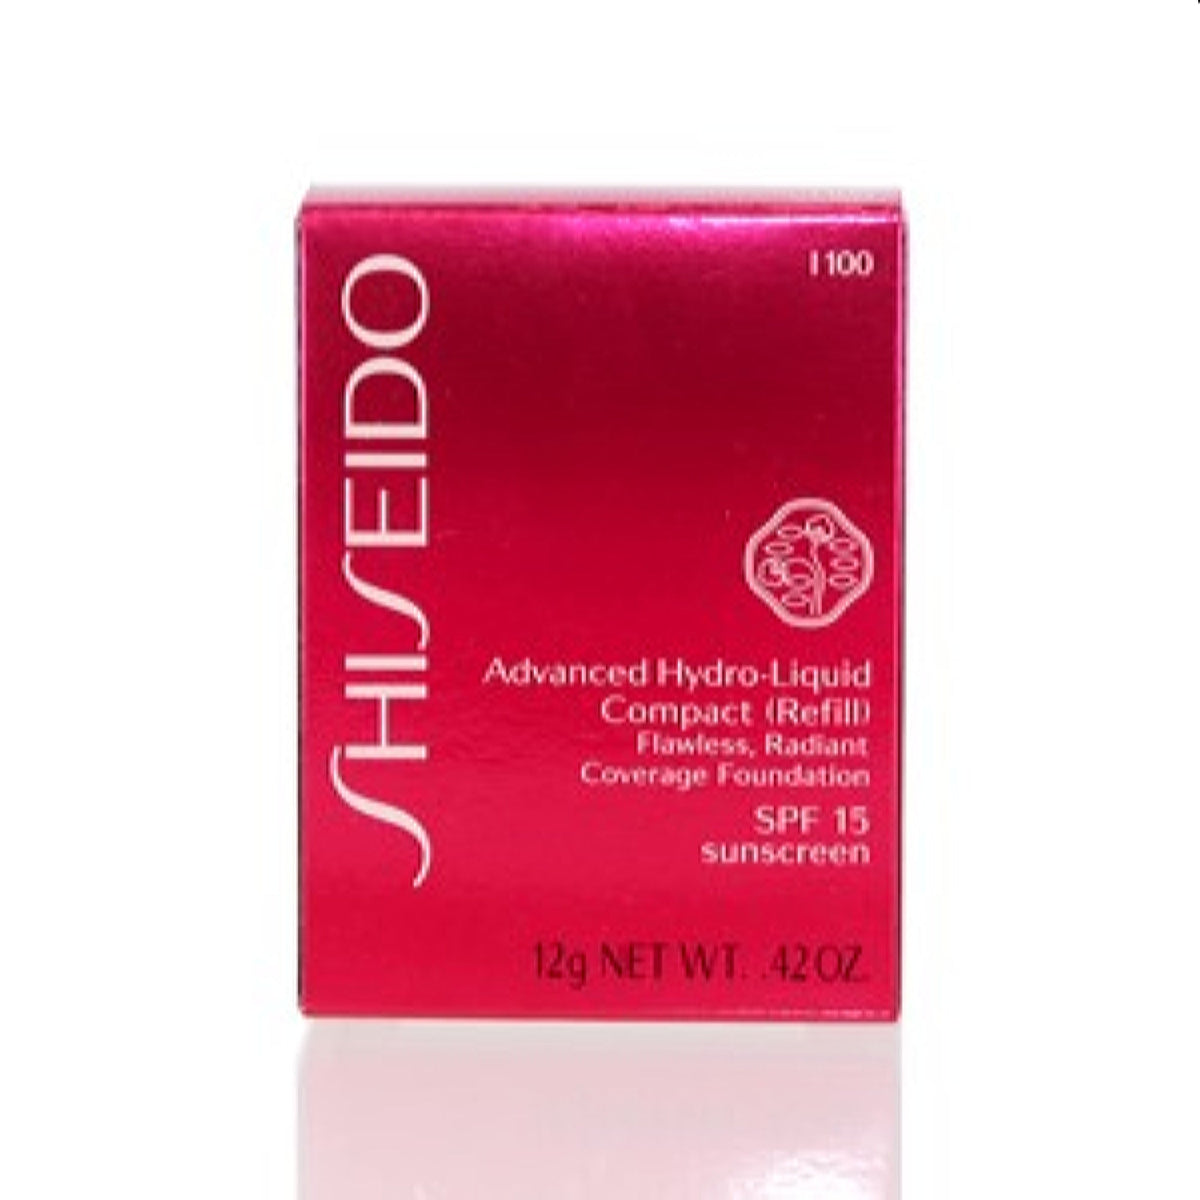 Shiseido Advanced Hydro-Liquid Compact Foundation Refill (I100) 0.42 Oz (12 Ml) 10801